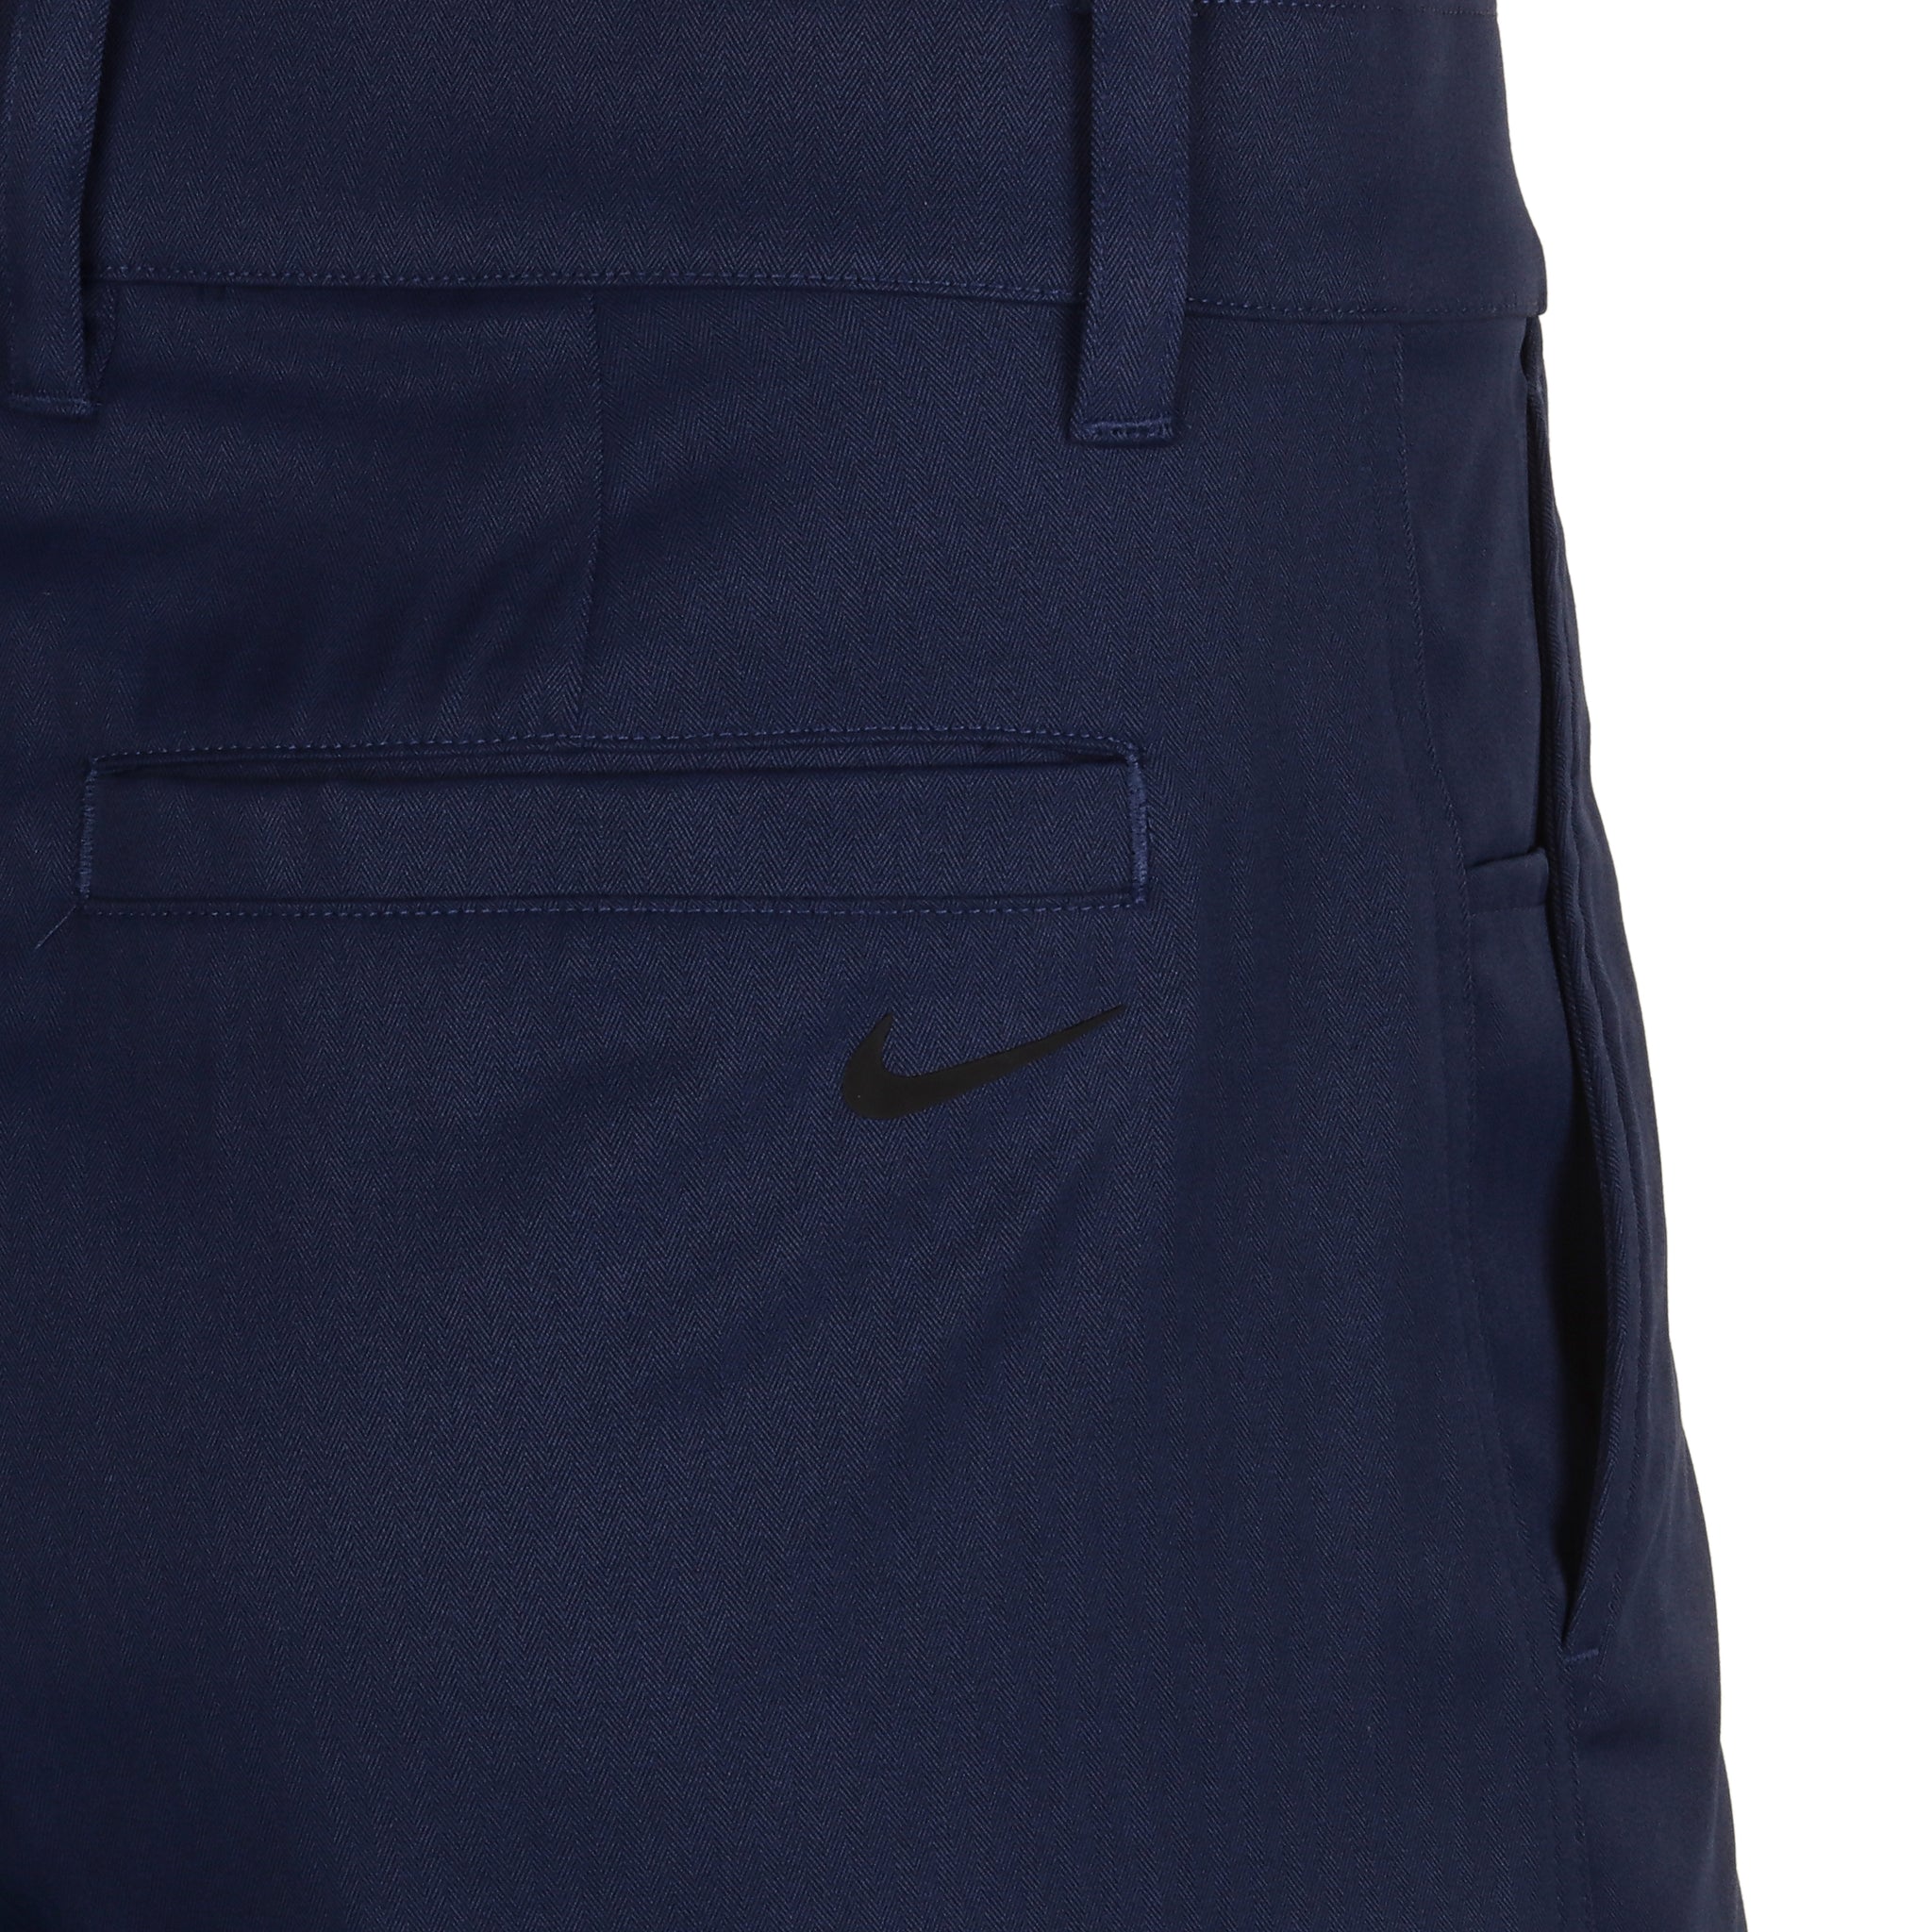 Nike Golf 8'' Tour Chino Shorts